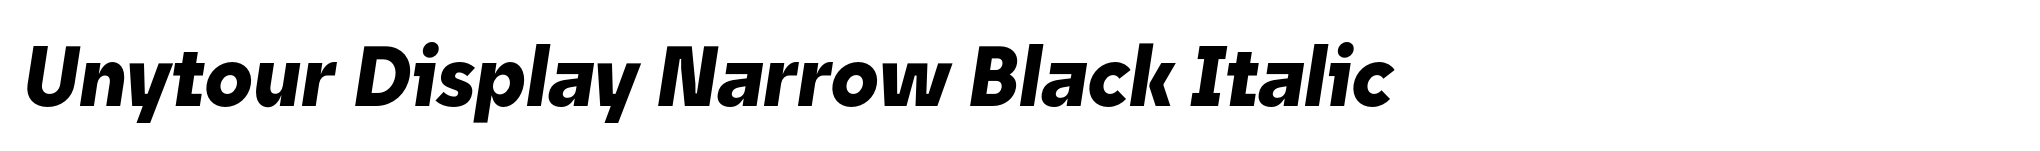 Unytour Display Narrow Black Italic image